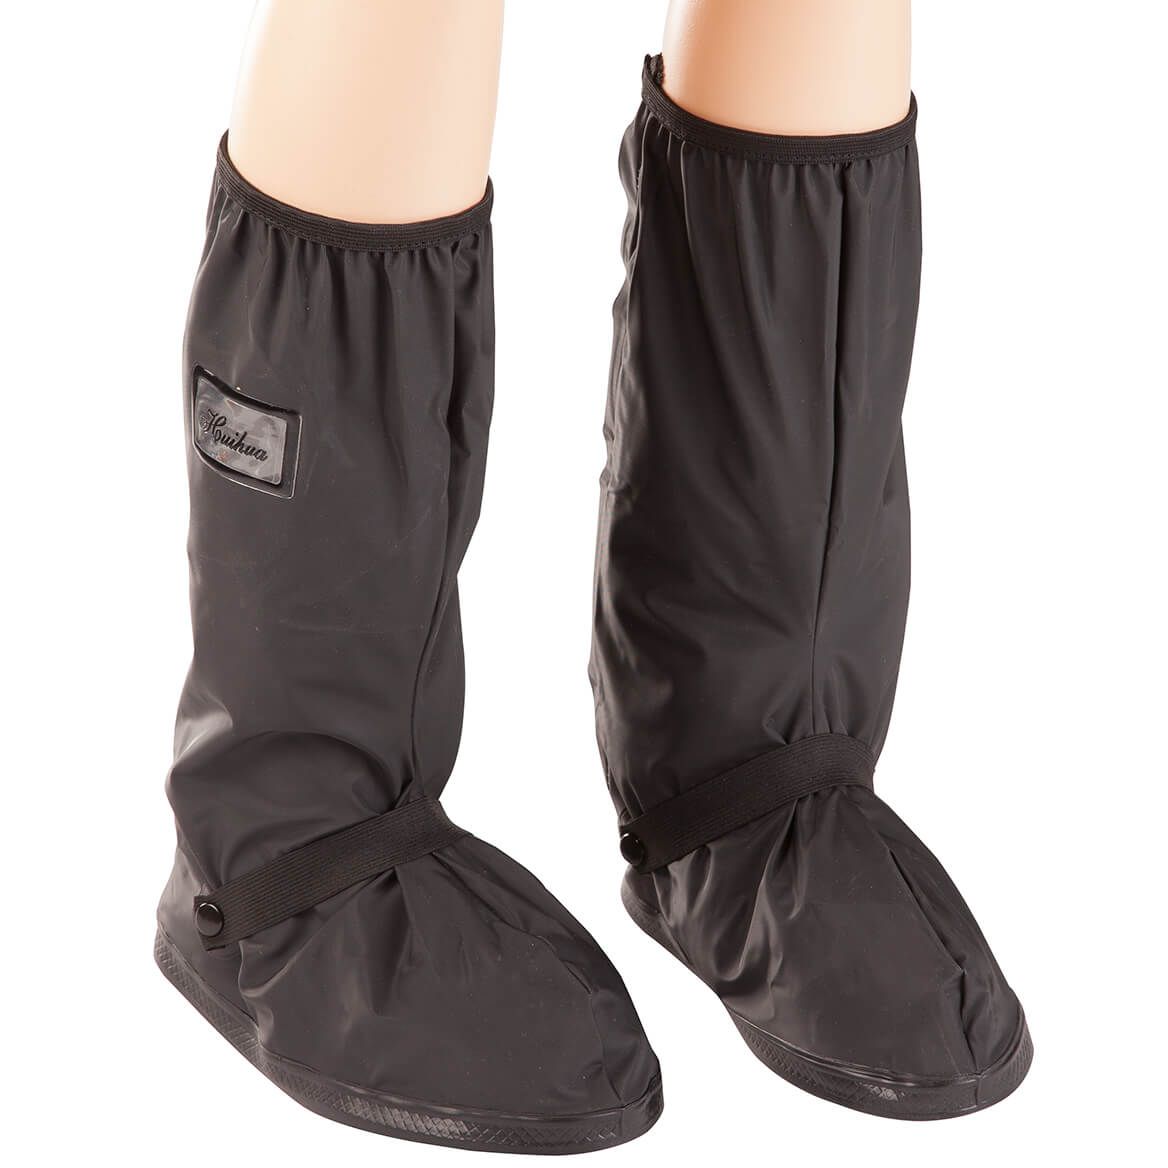 Waterproof Rain Boot Shoe Covers + '-' + 368011